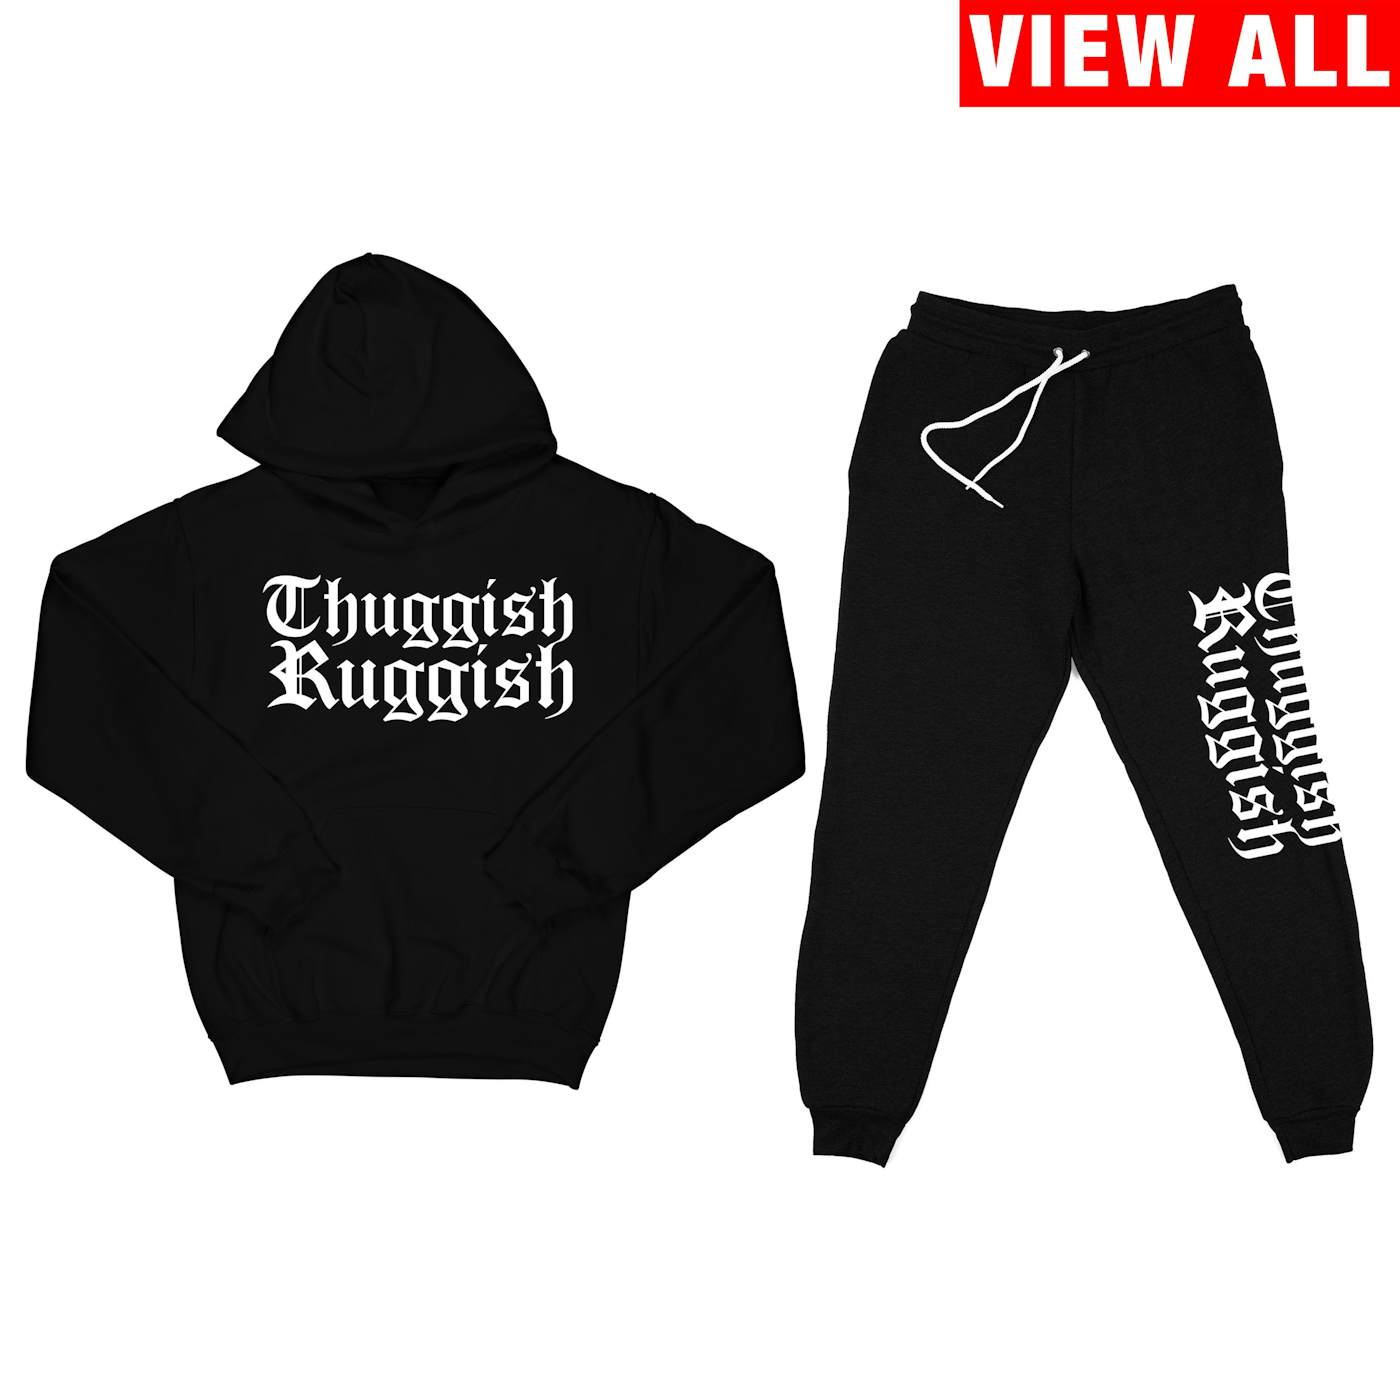 Bone Thugs-N-Harmony Thuggish Ruggish Sweat Suit